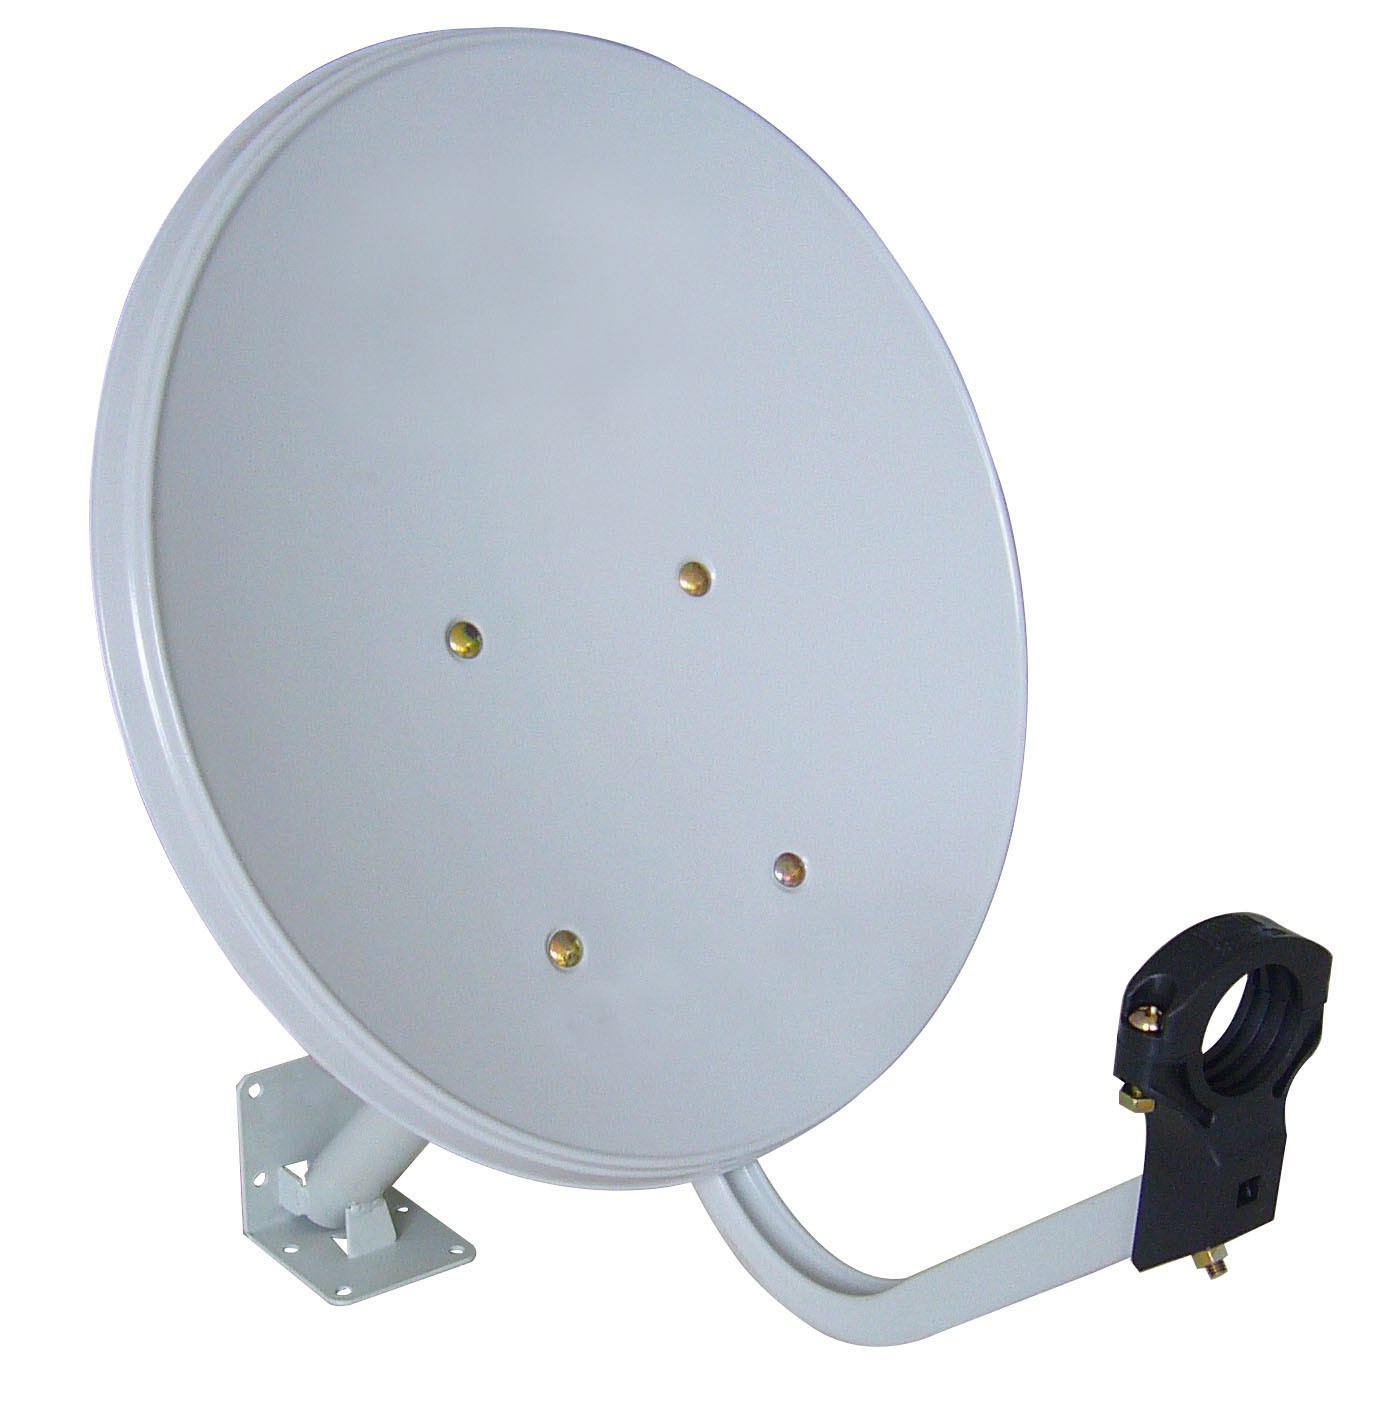 60cm Ku band satellite dish antenna